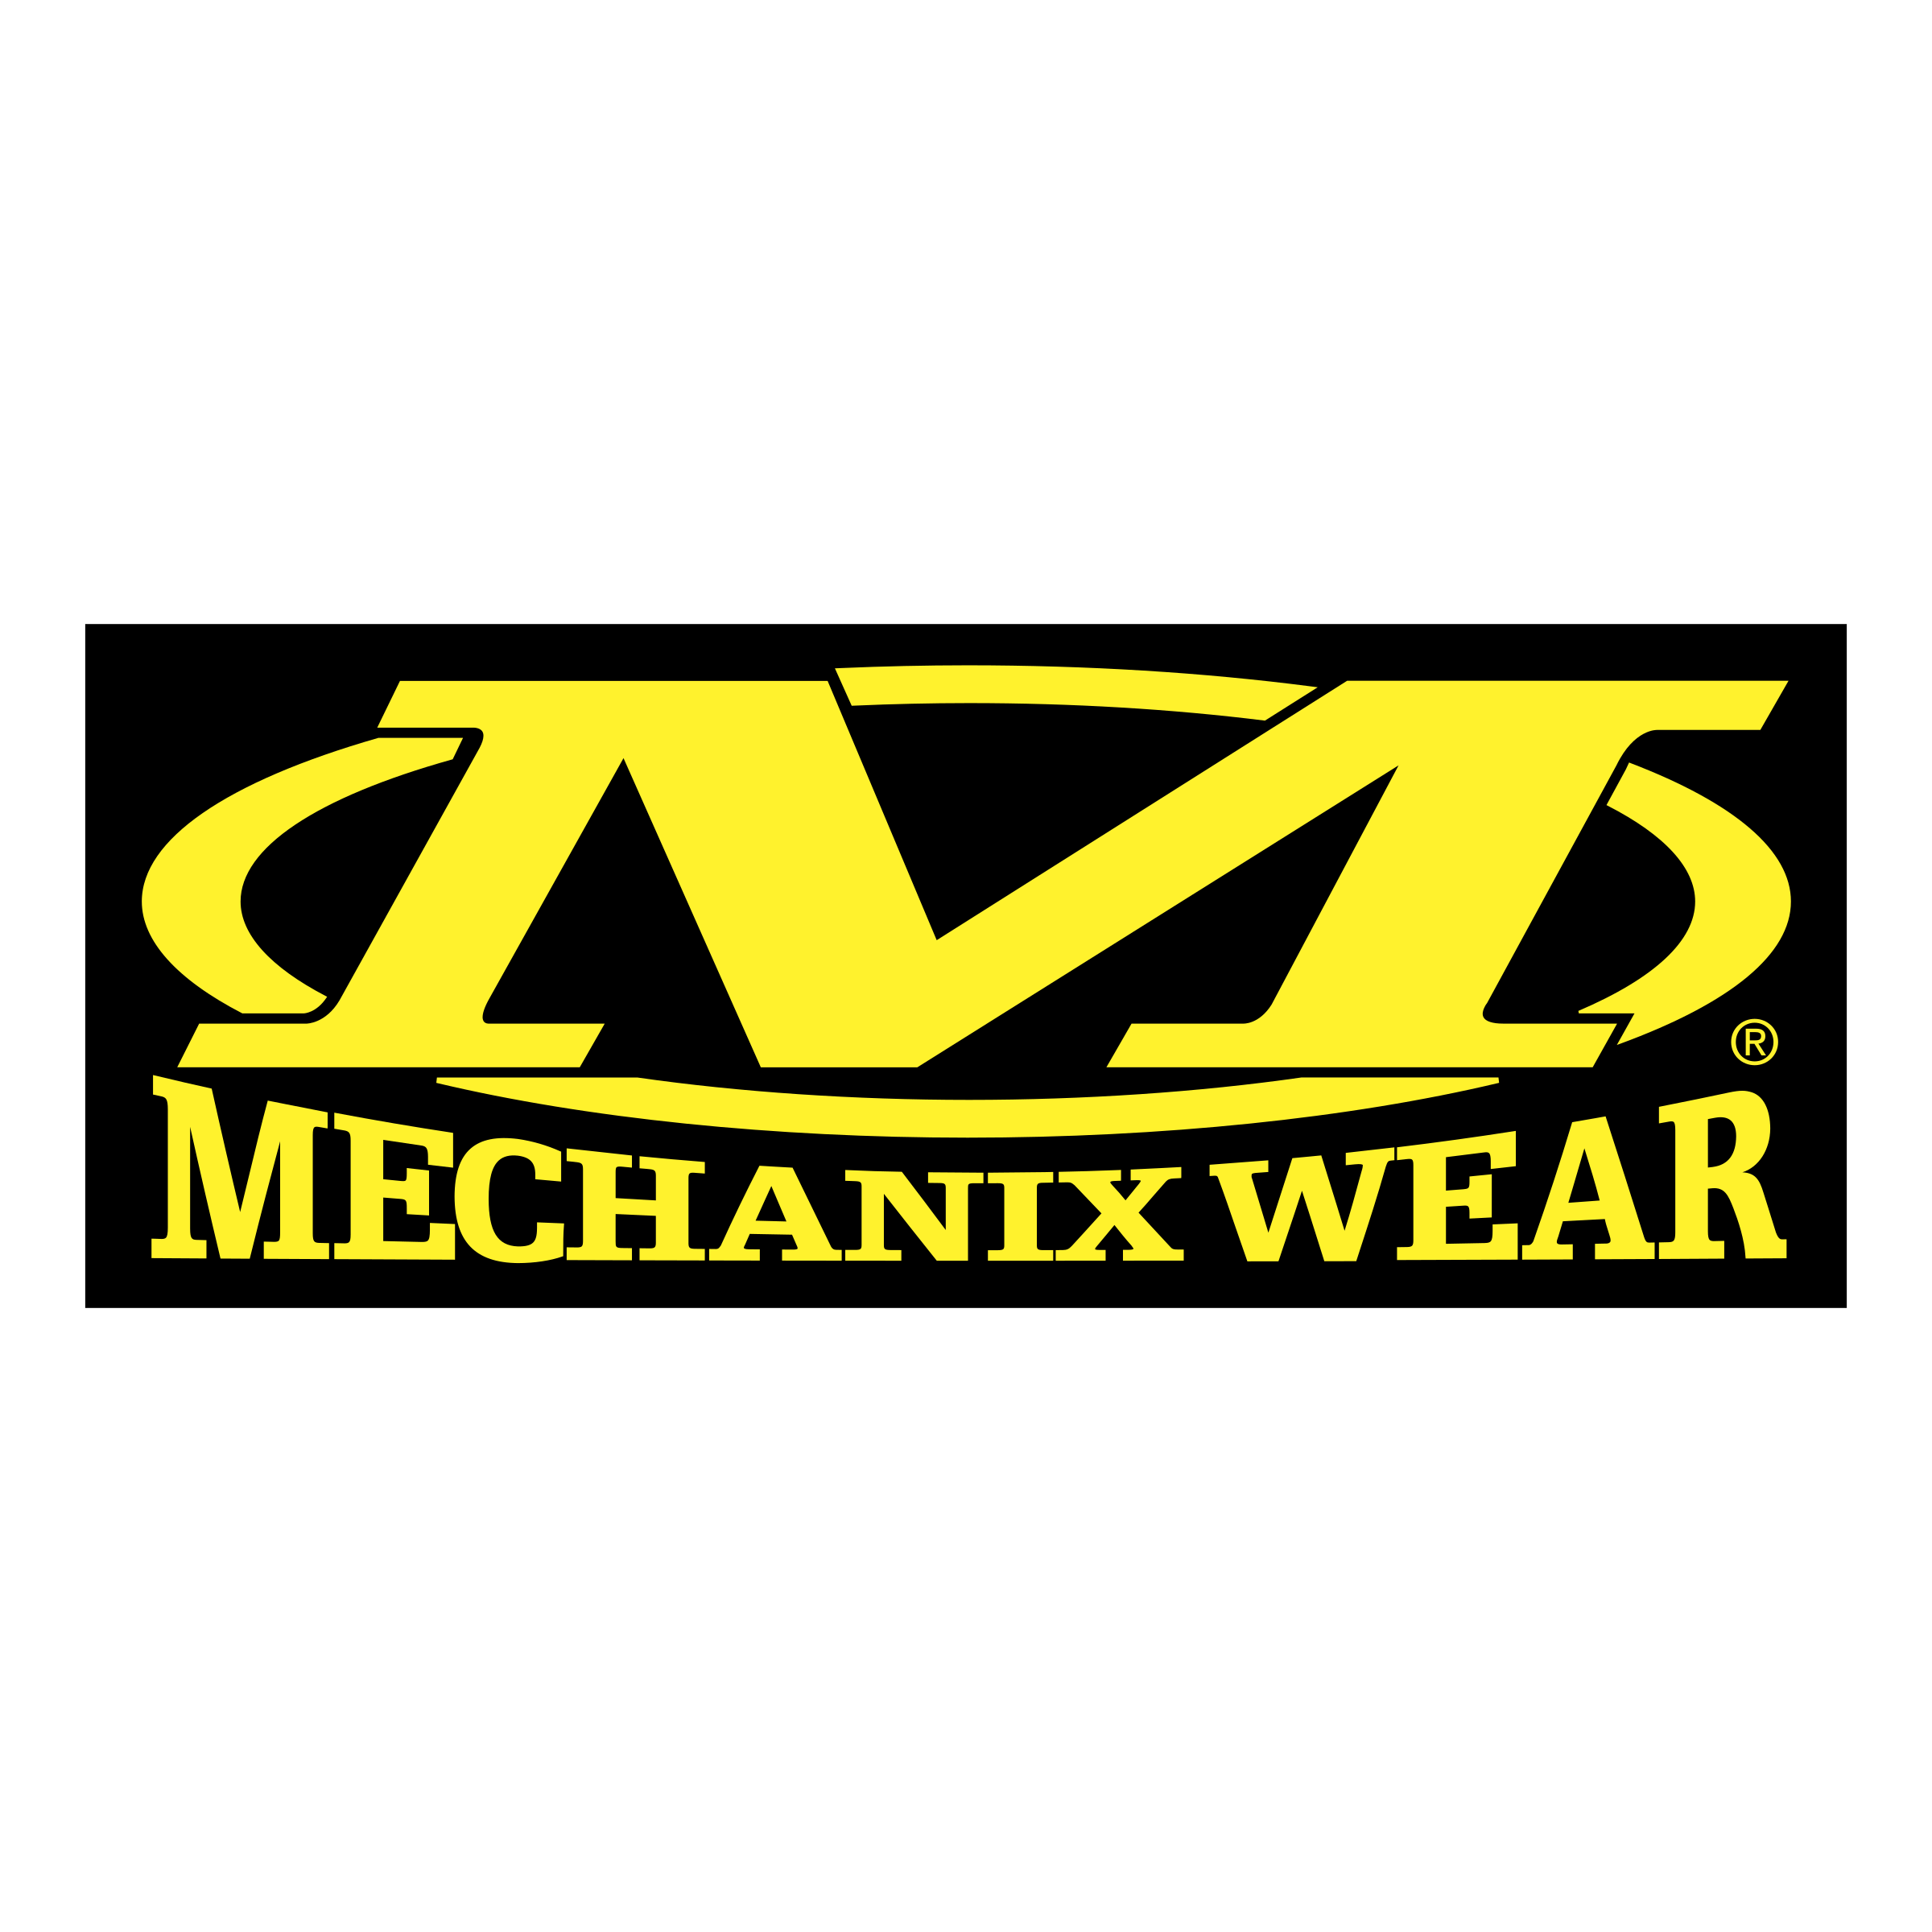 Mechanix Logo - Mechanix Wear Logo PNG Transparent & SVG Vector - Freebie Supply